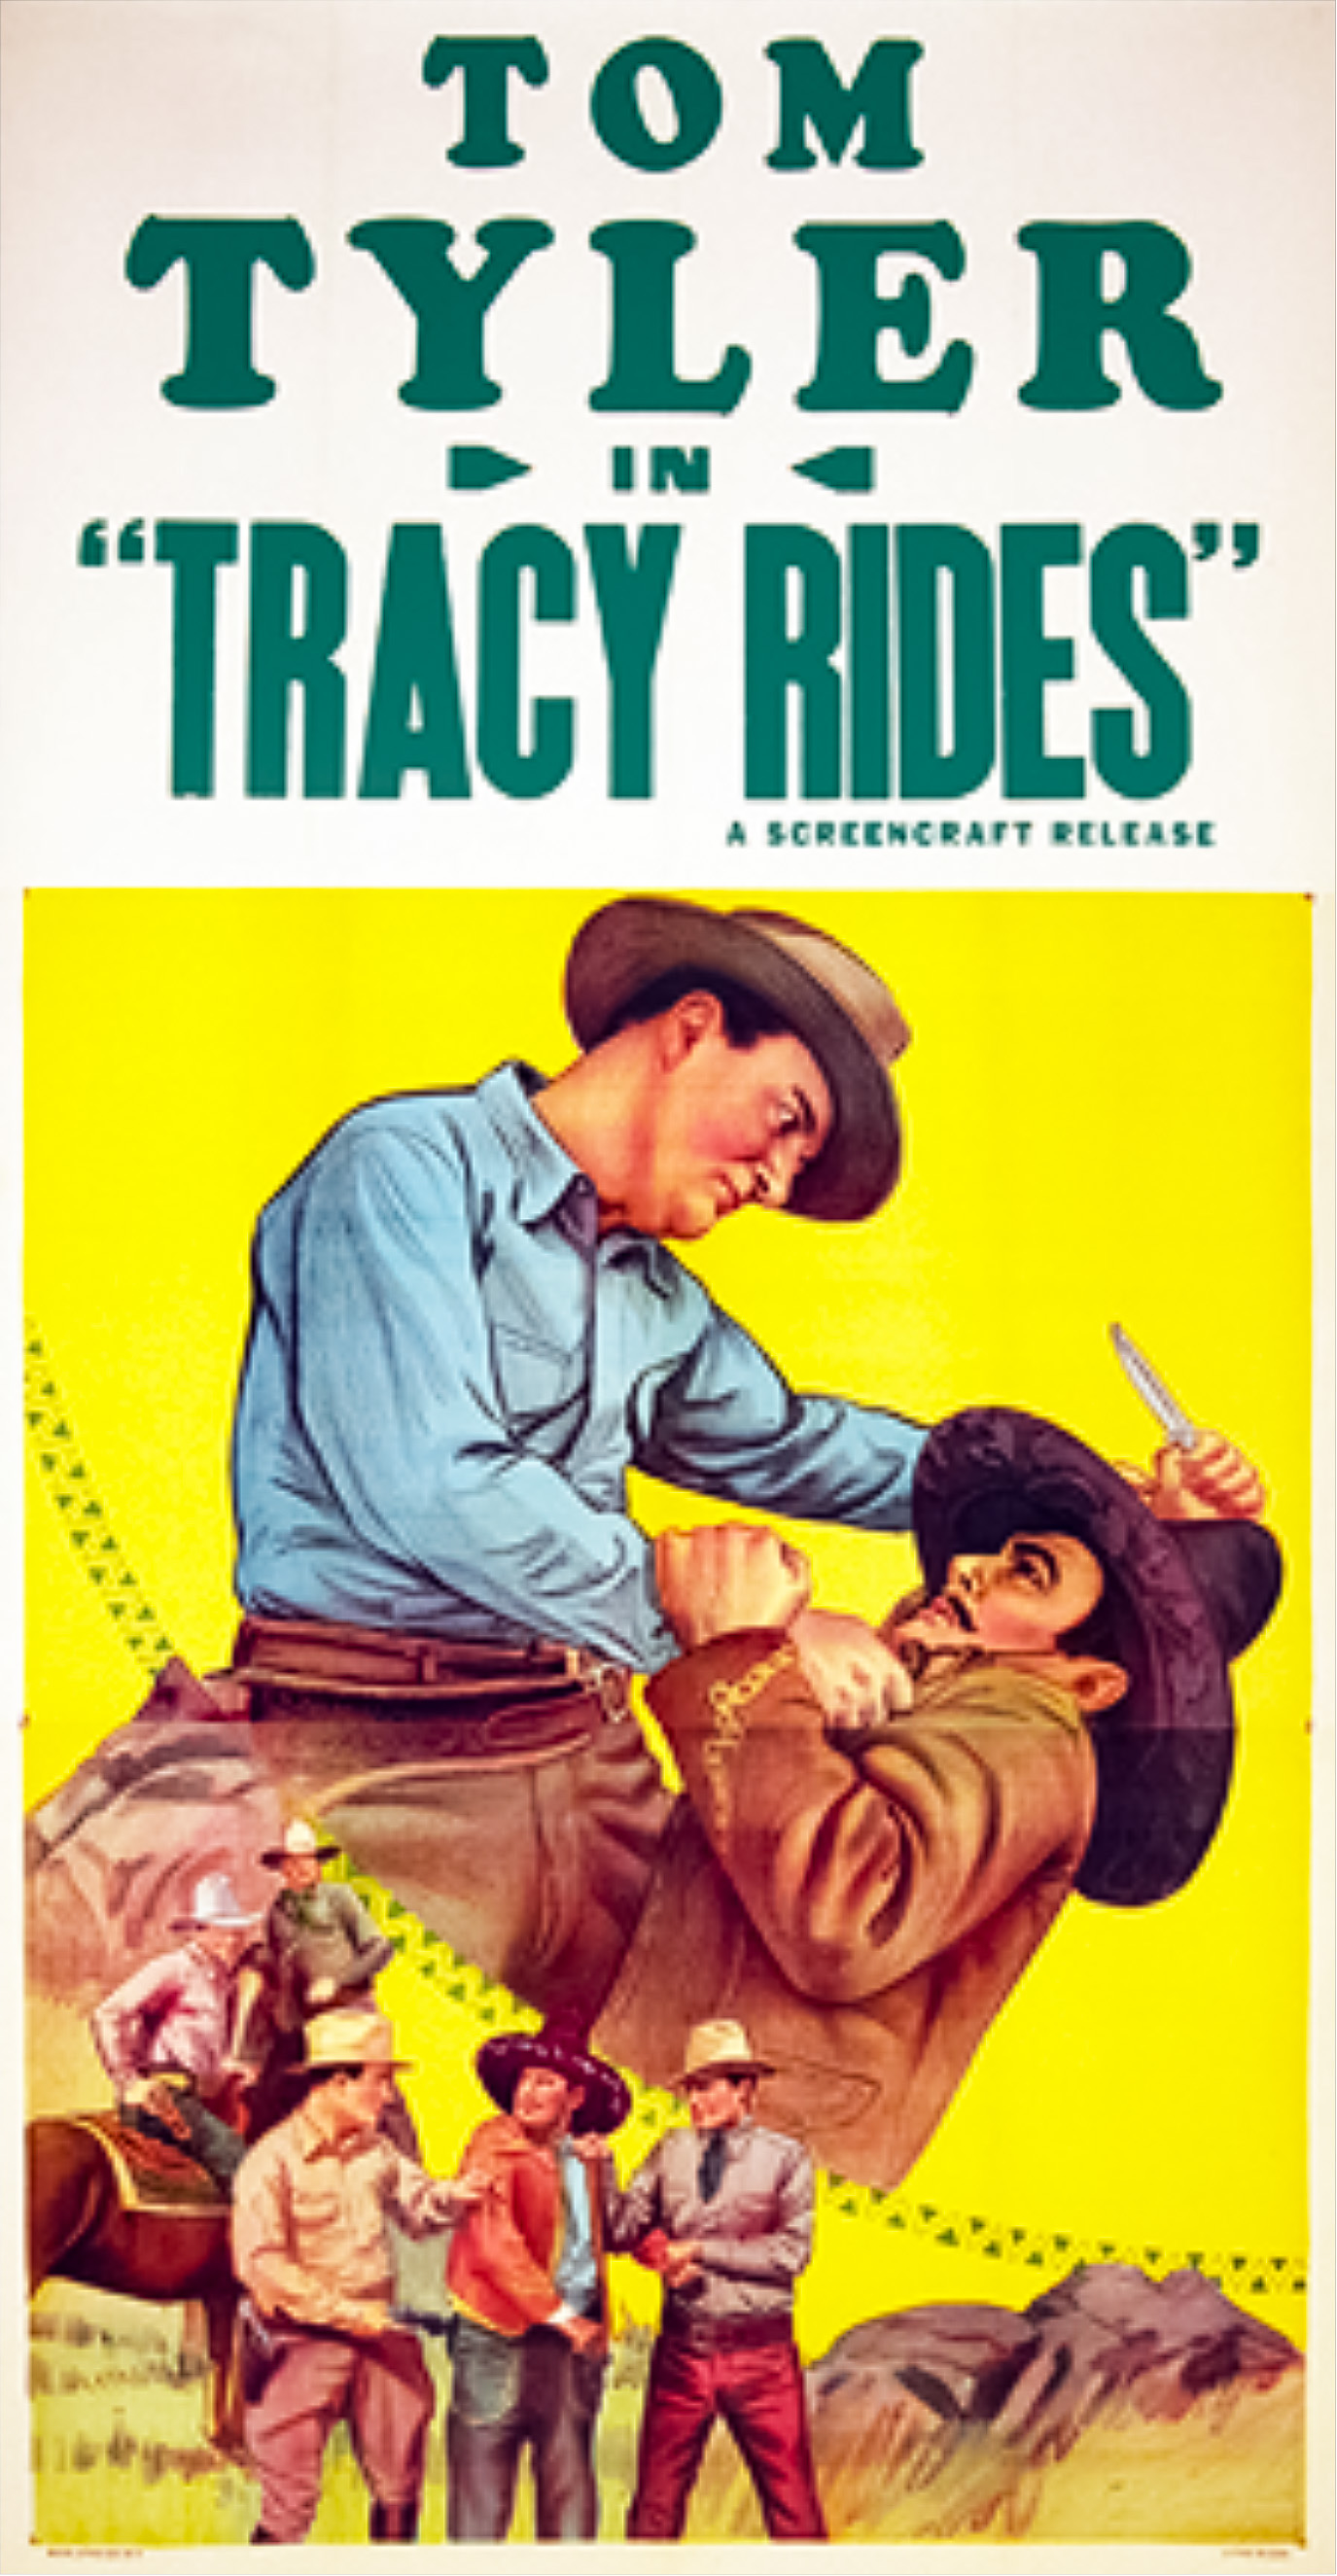 Tracy Rides